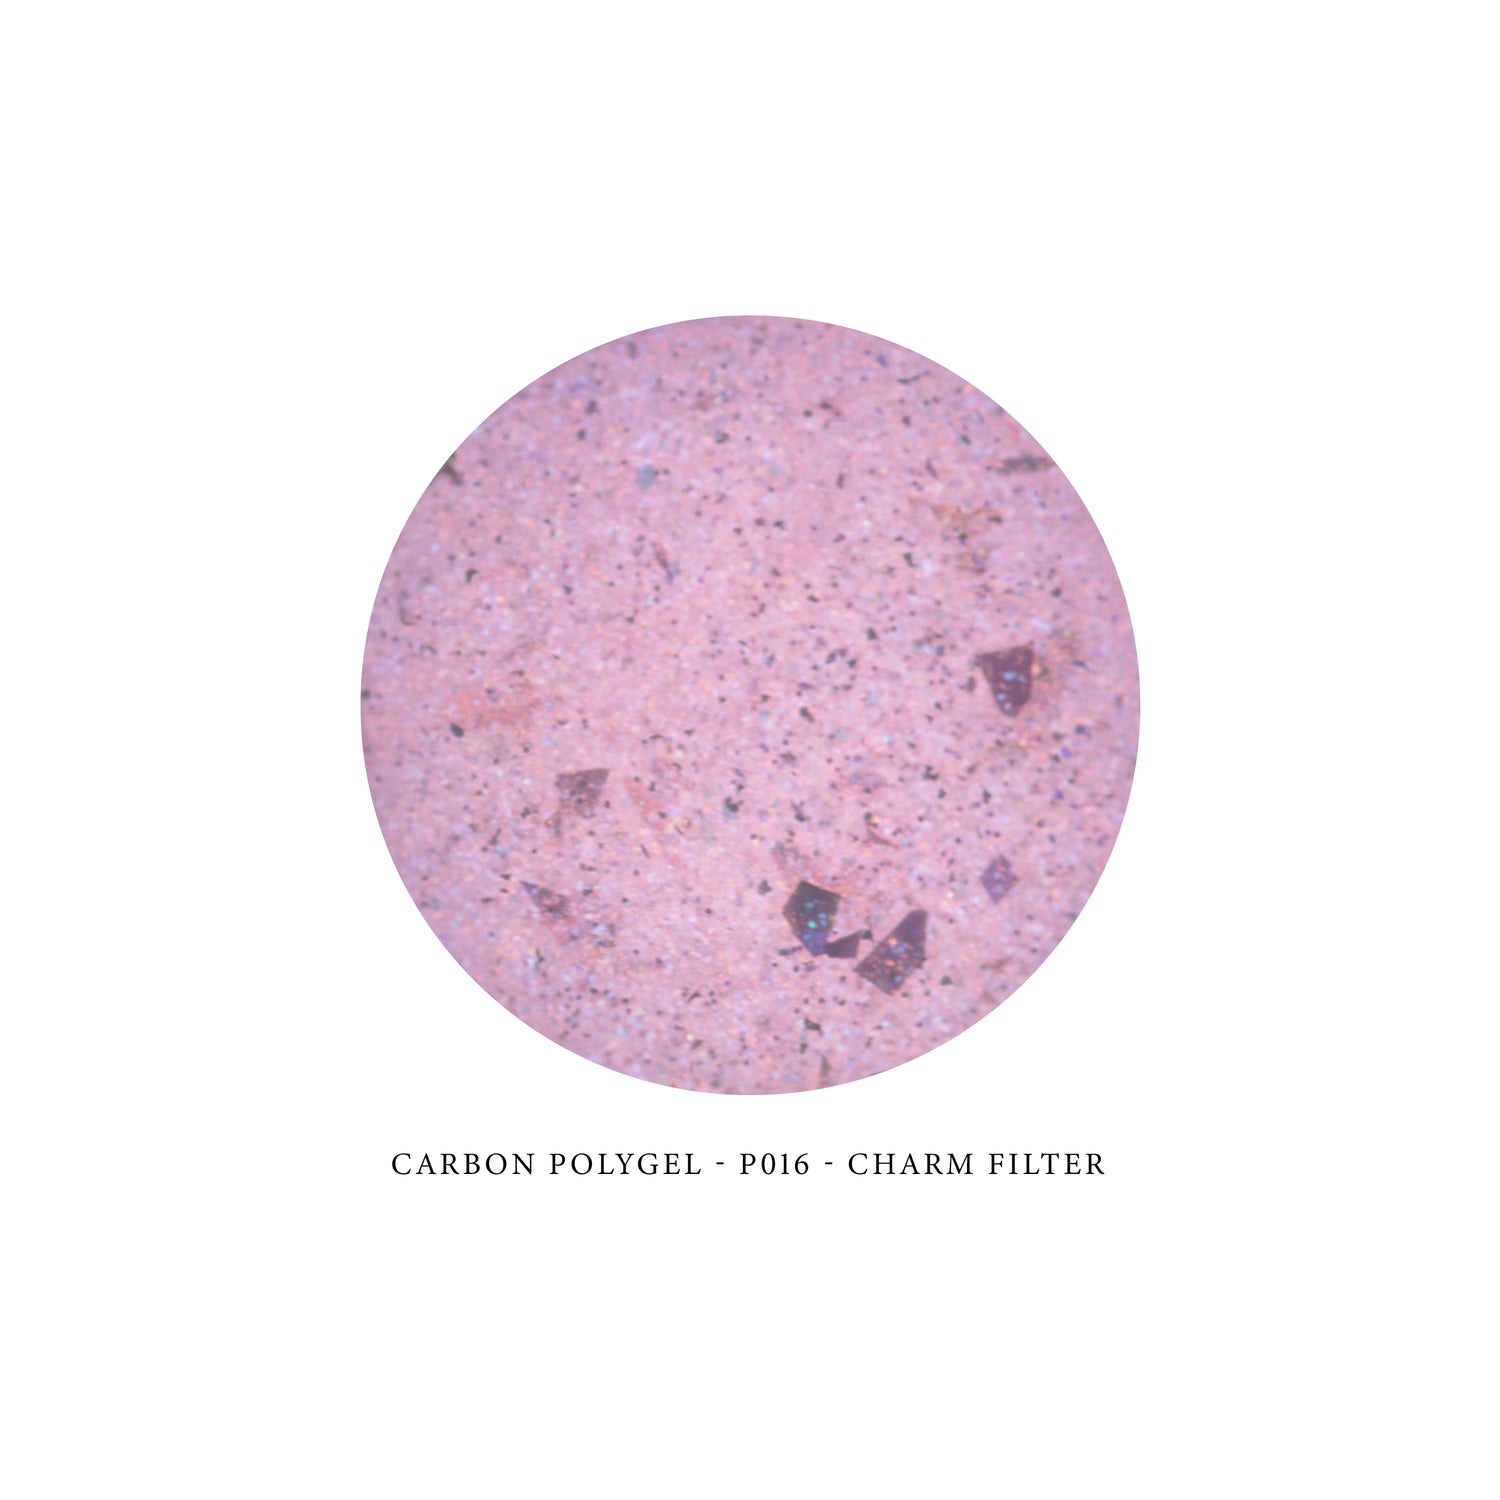 Carbon Polygel P016 - CHARM FILTER 30g